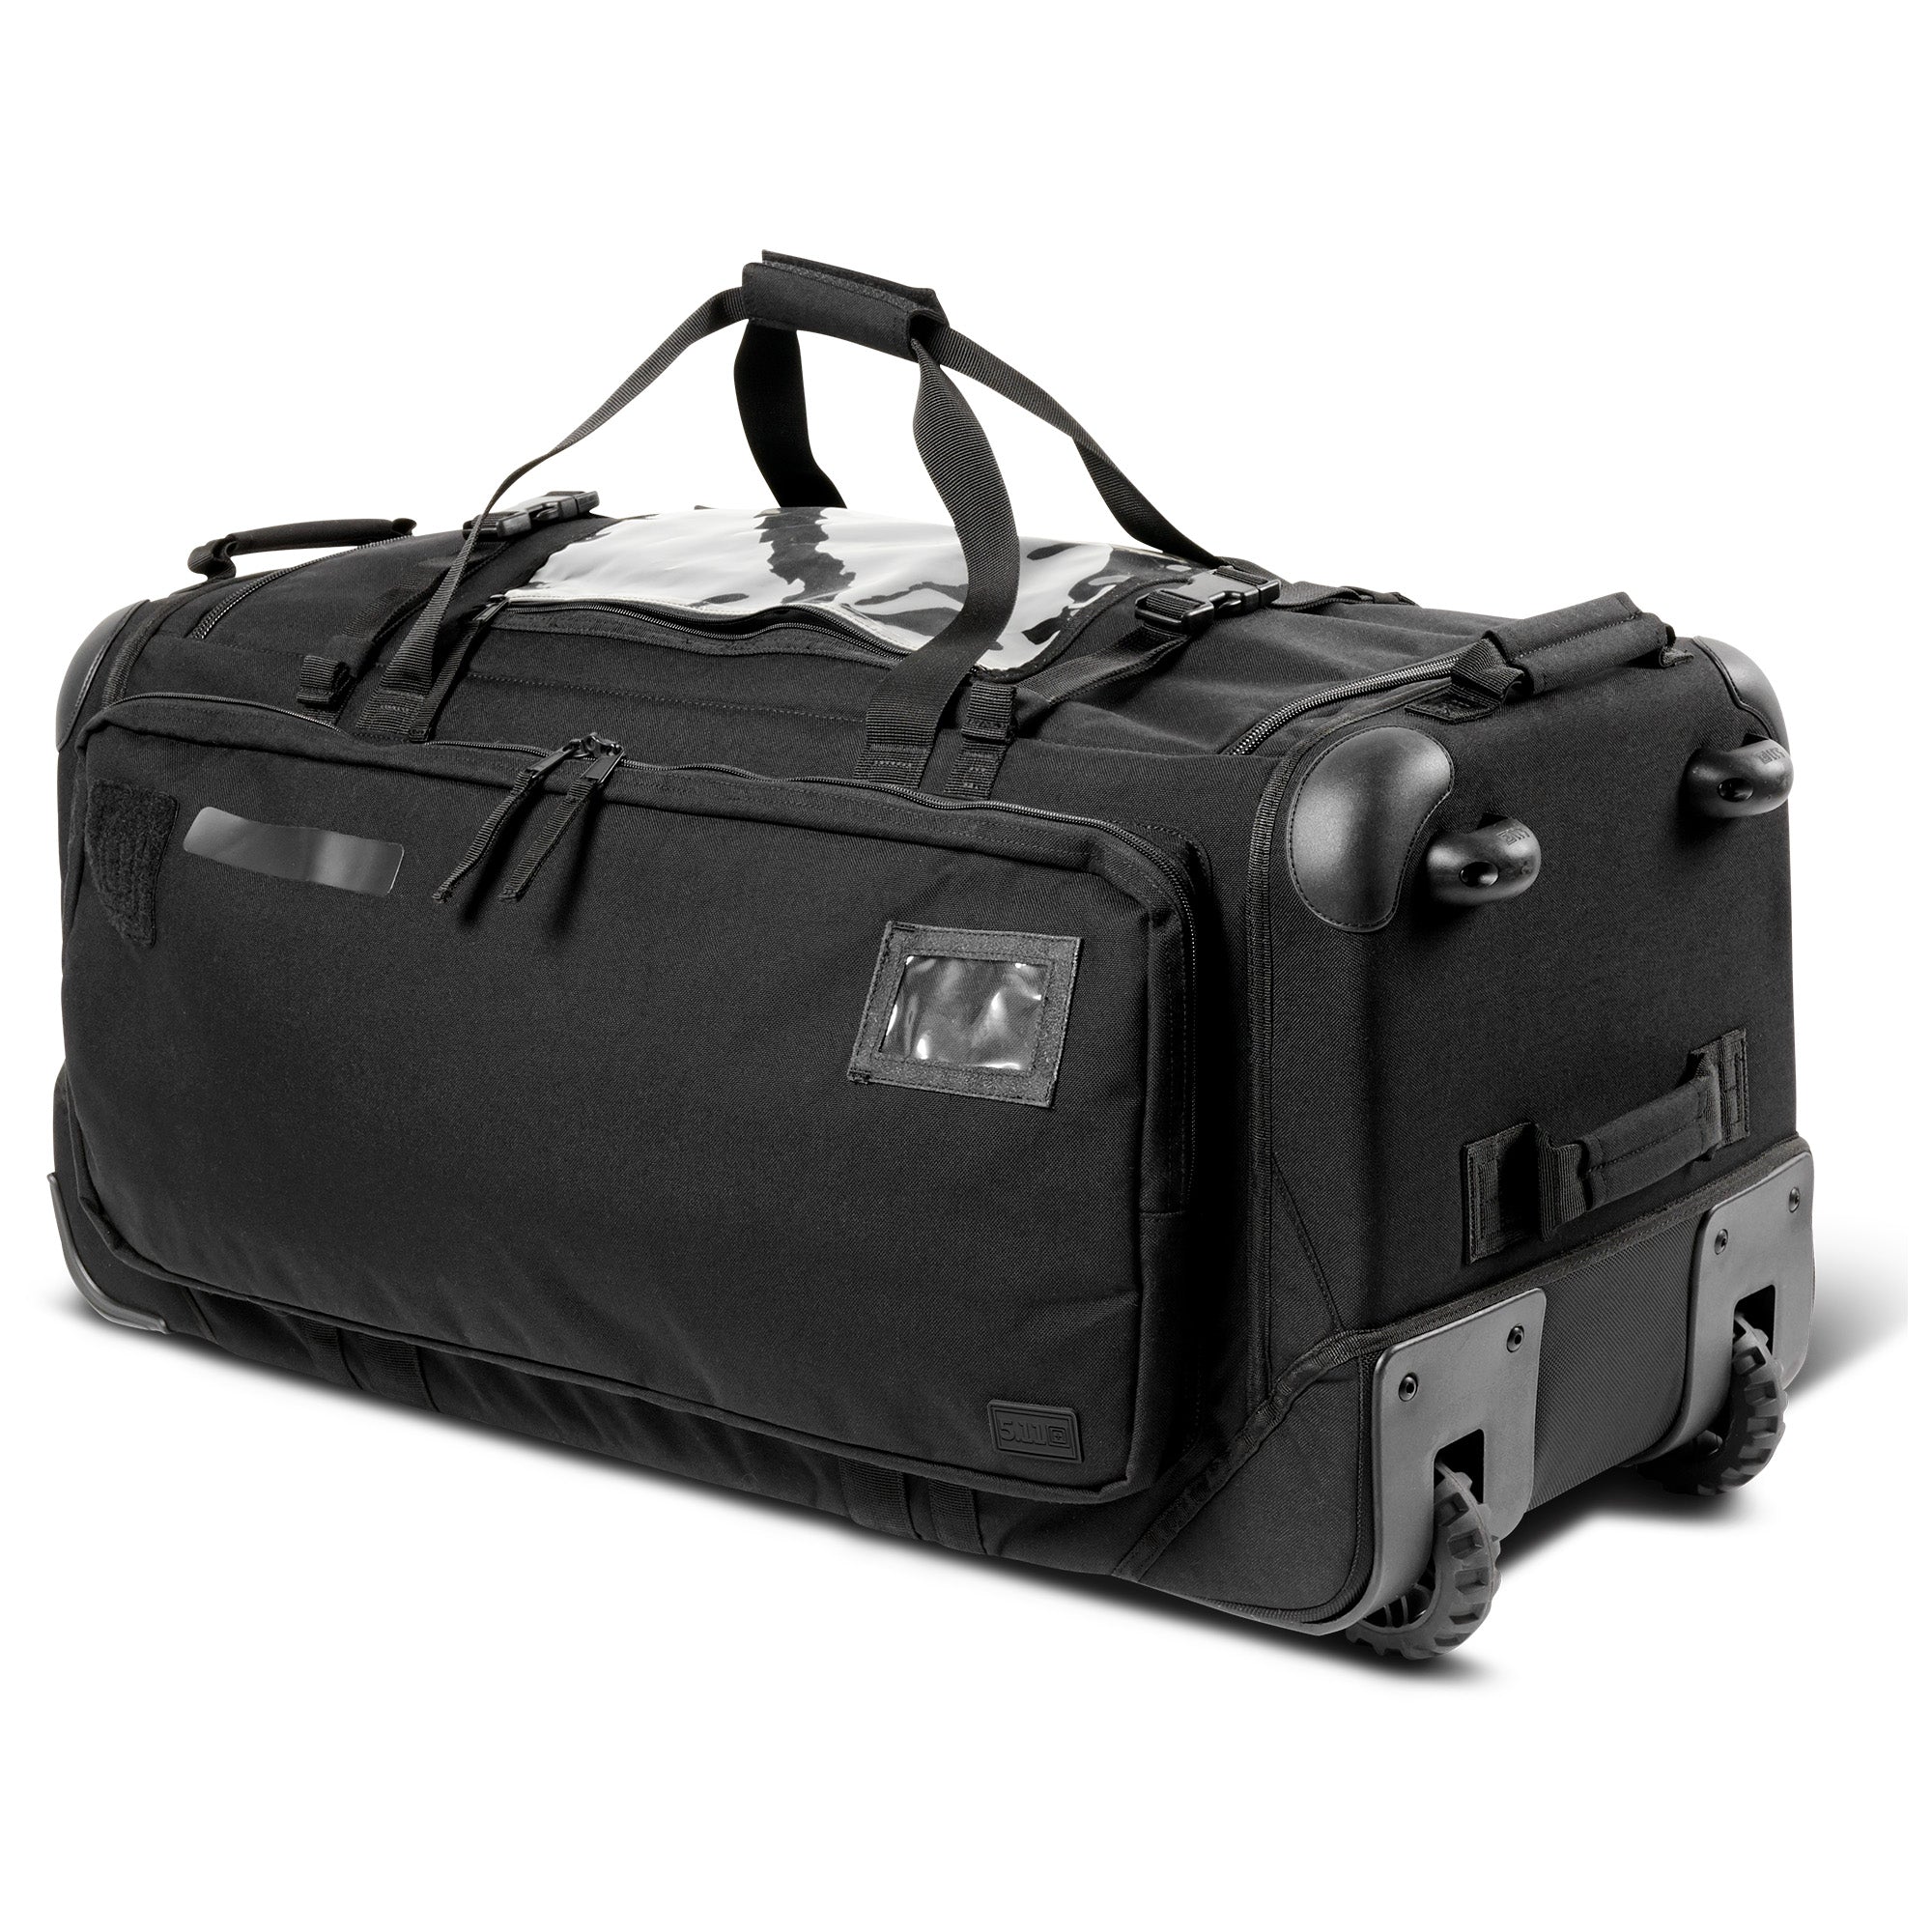 5.11 Tactical SOMS 3.0 126L Rolling Duffle Bag Black Bags, Packs and Cases 5.11 Tactical Tactical Gear Supplier Tactical Distributors Australia